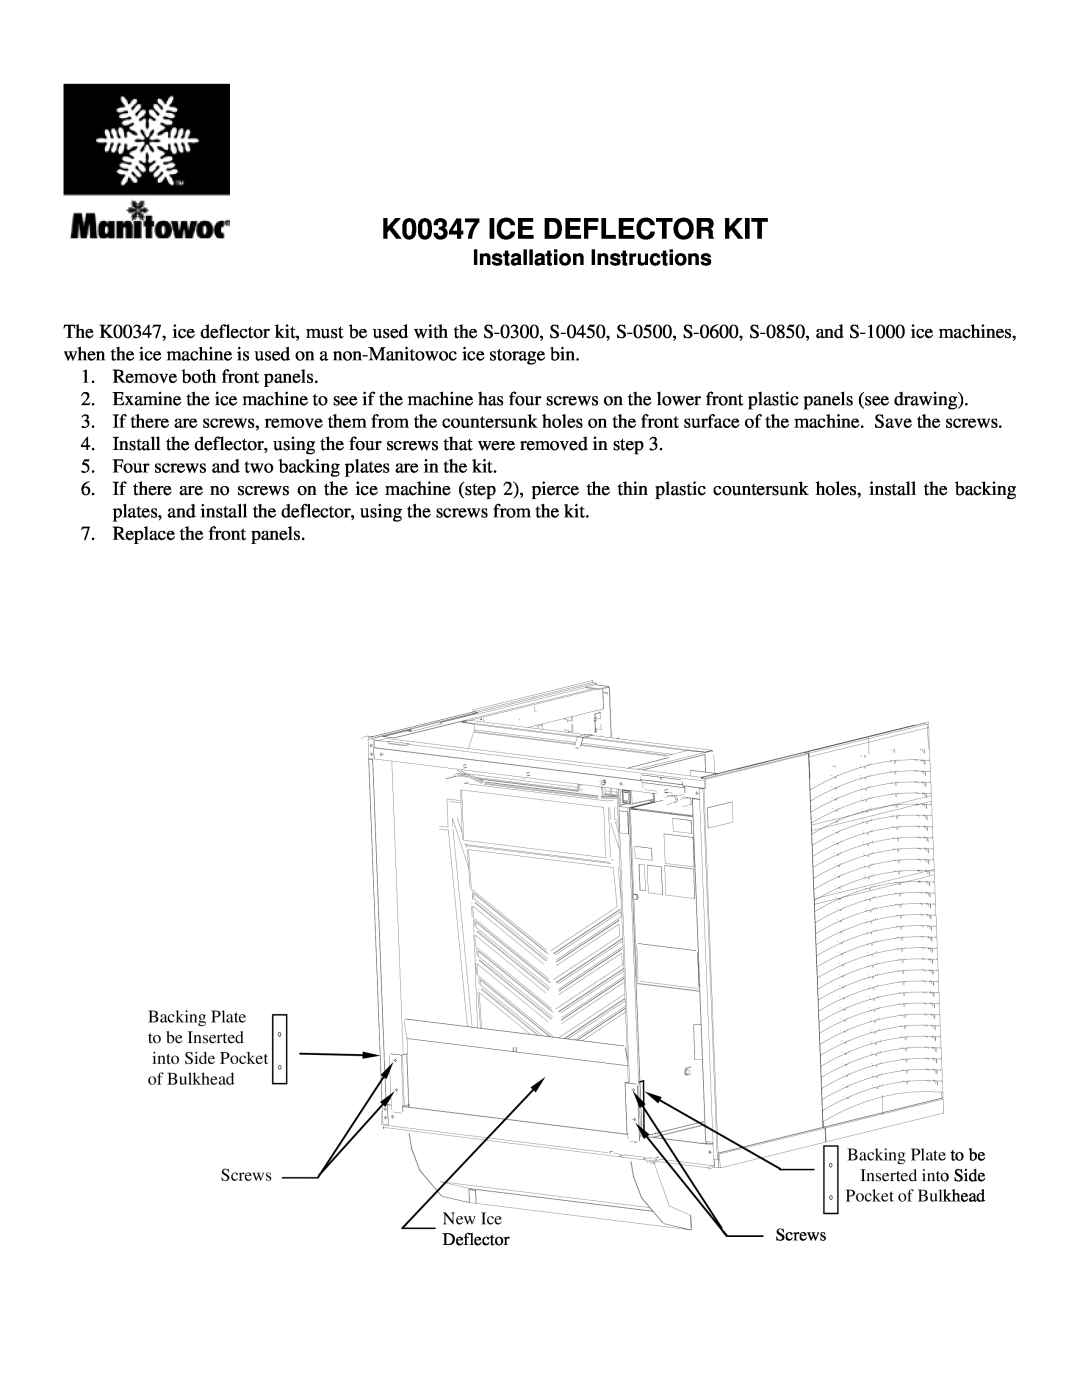 Manitowoc Ice installation instructions K00347 ICE DEFLECTOR KIT, Installation Instructions 